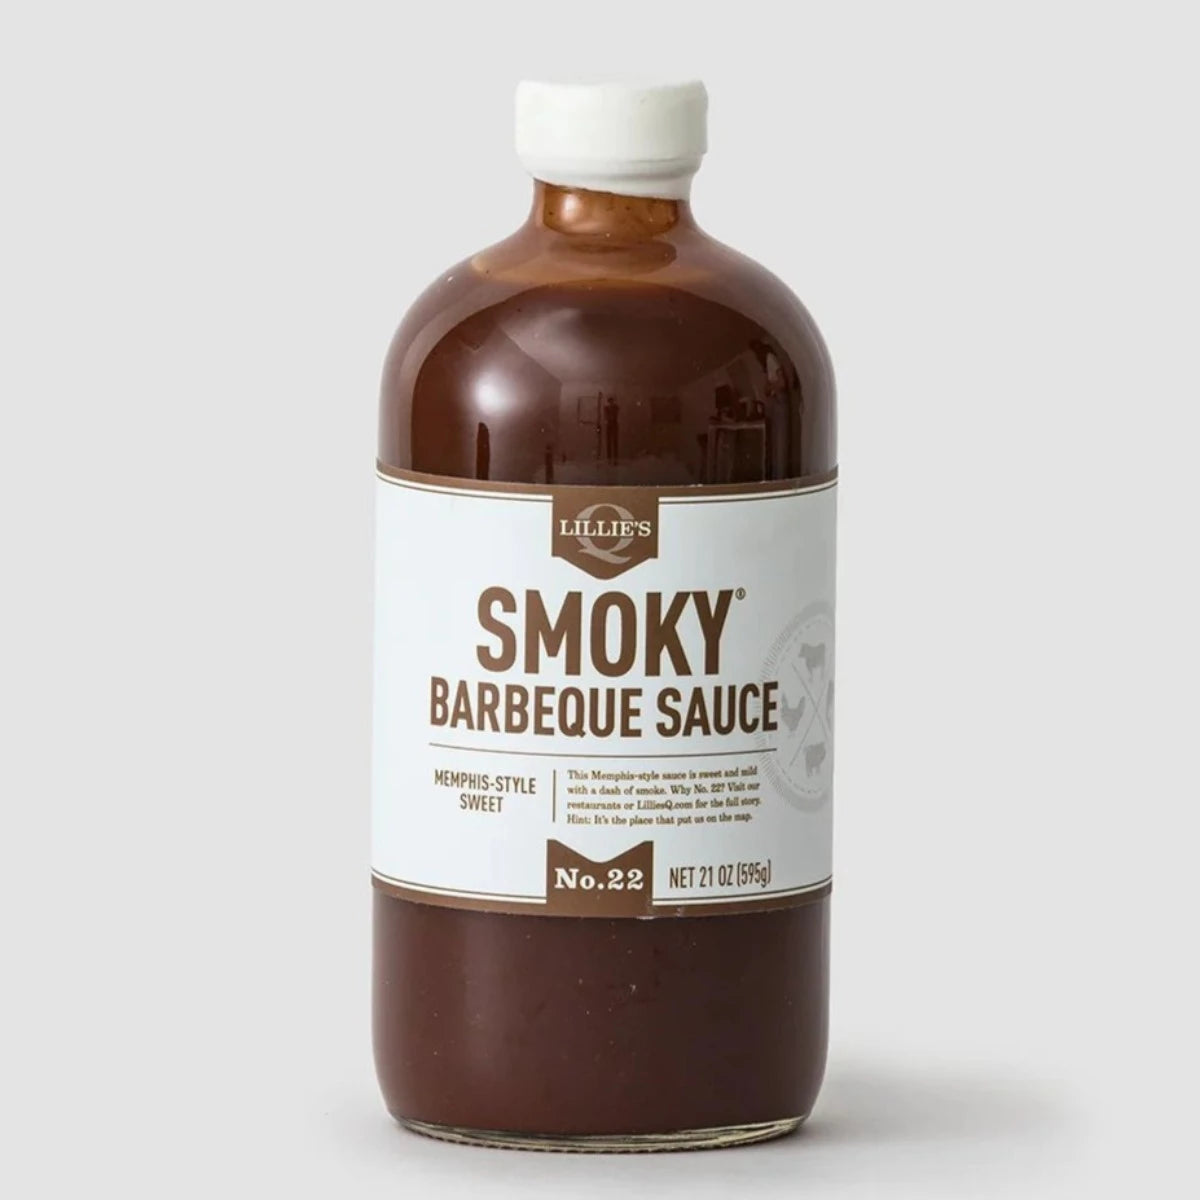 Lillie's Q Smoky BBQ Sauce, 473mL bottle